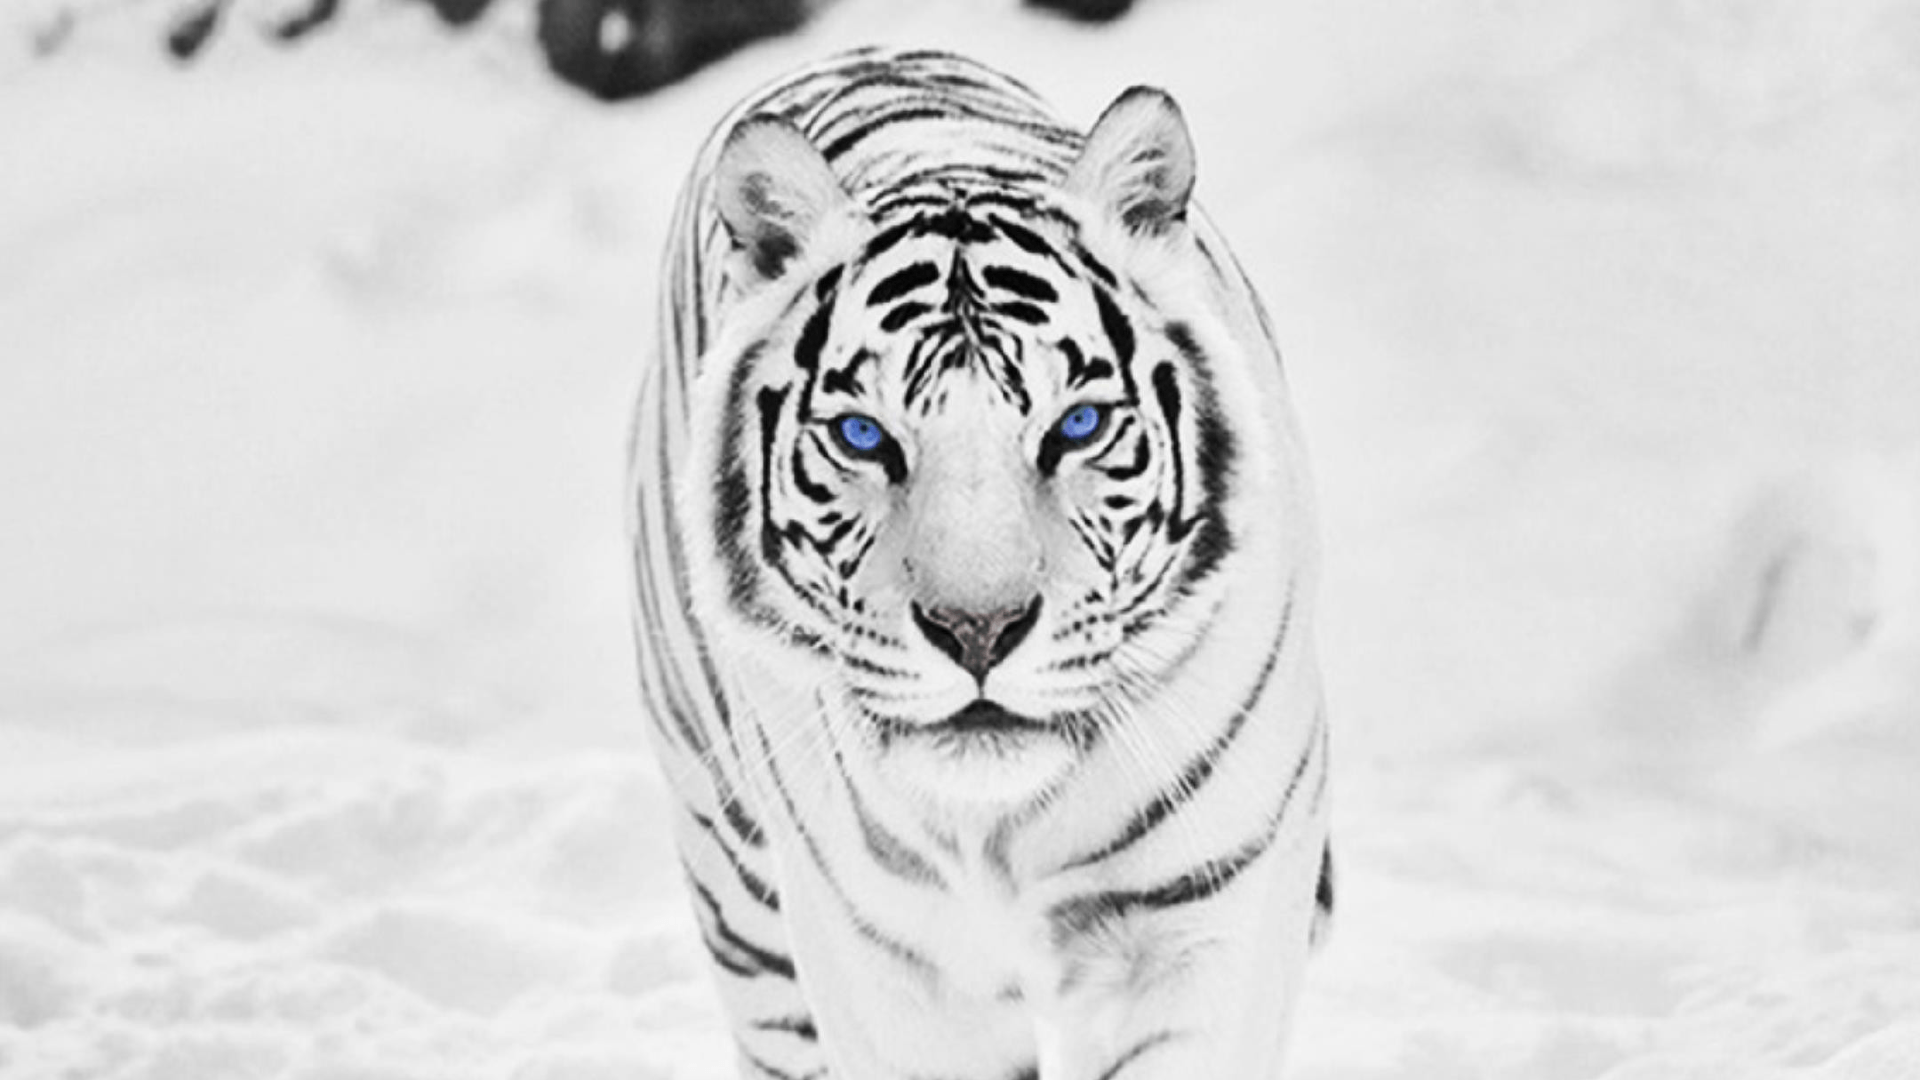 White Tiger HD Widescreen Wallpaper. Tiger wallpaper